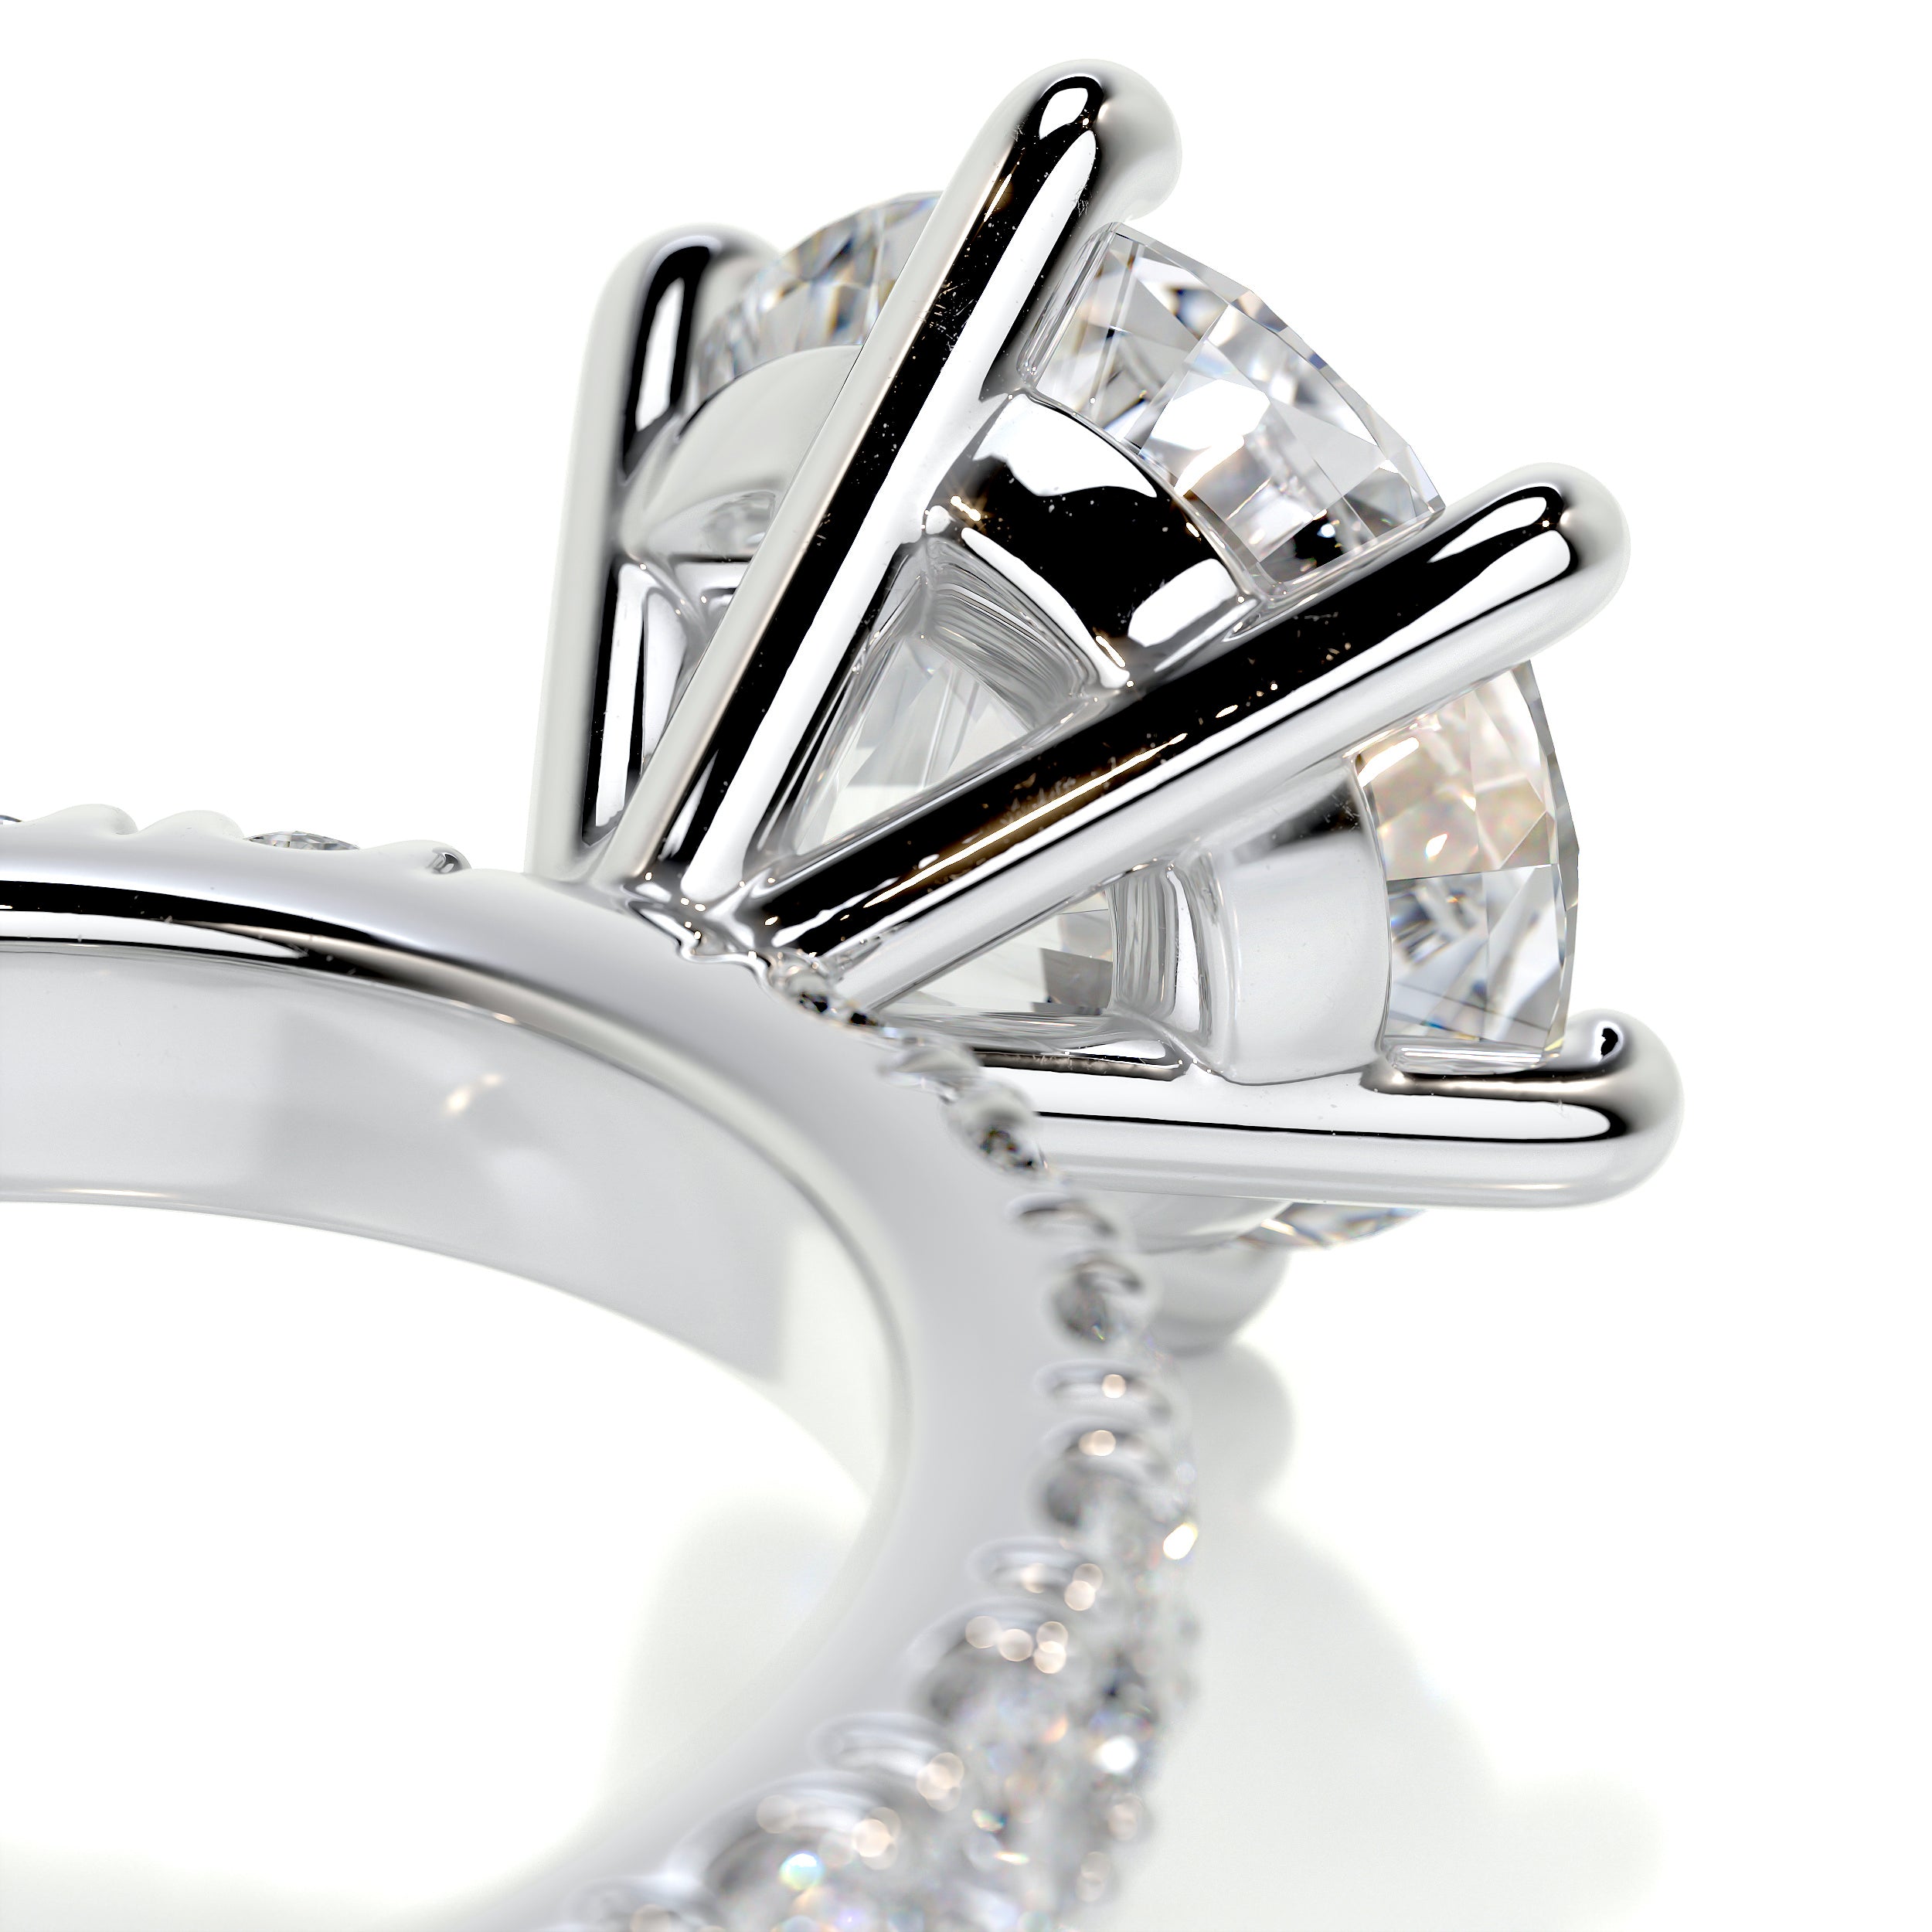 Jane Diamond Engagement Ring -14K White Gold